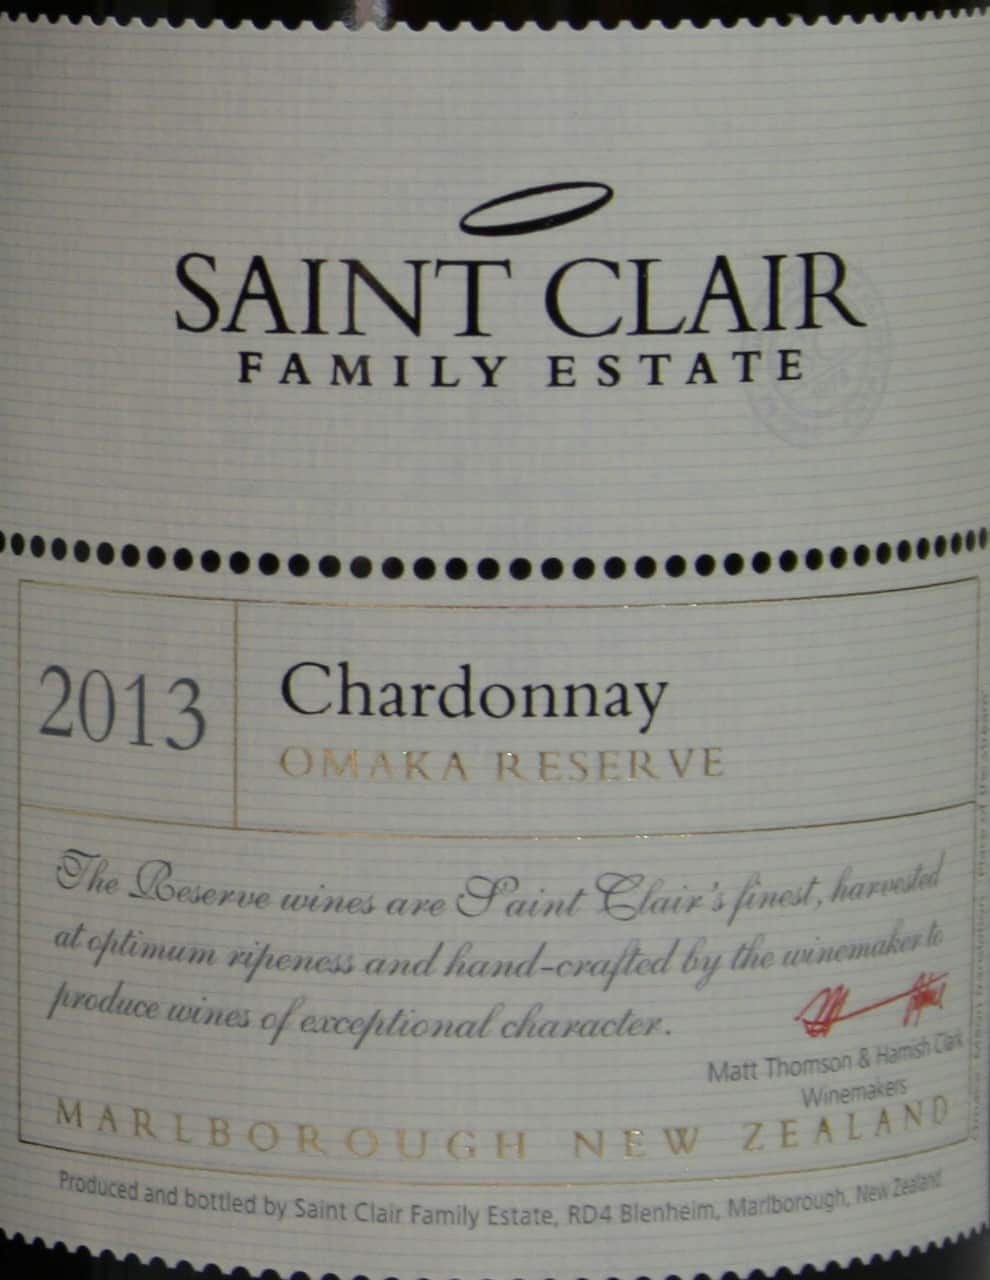 Saint Clair Family Estate Omaka Reserve Chardonnay 2013